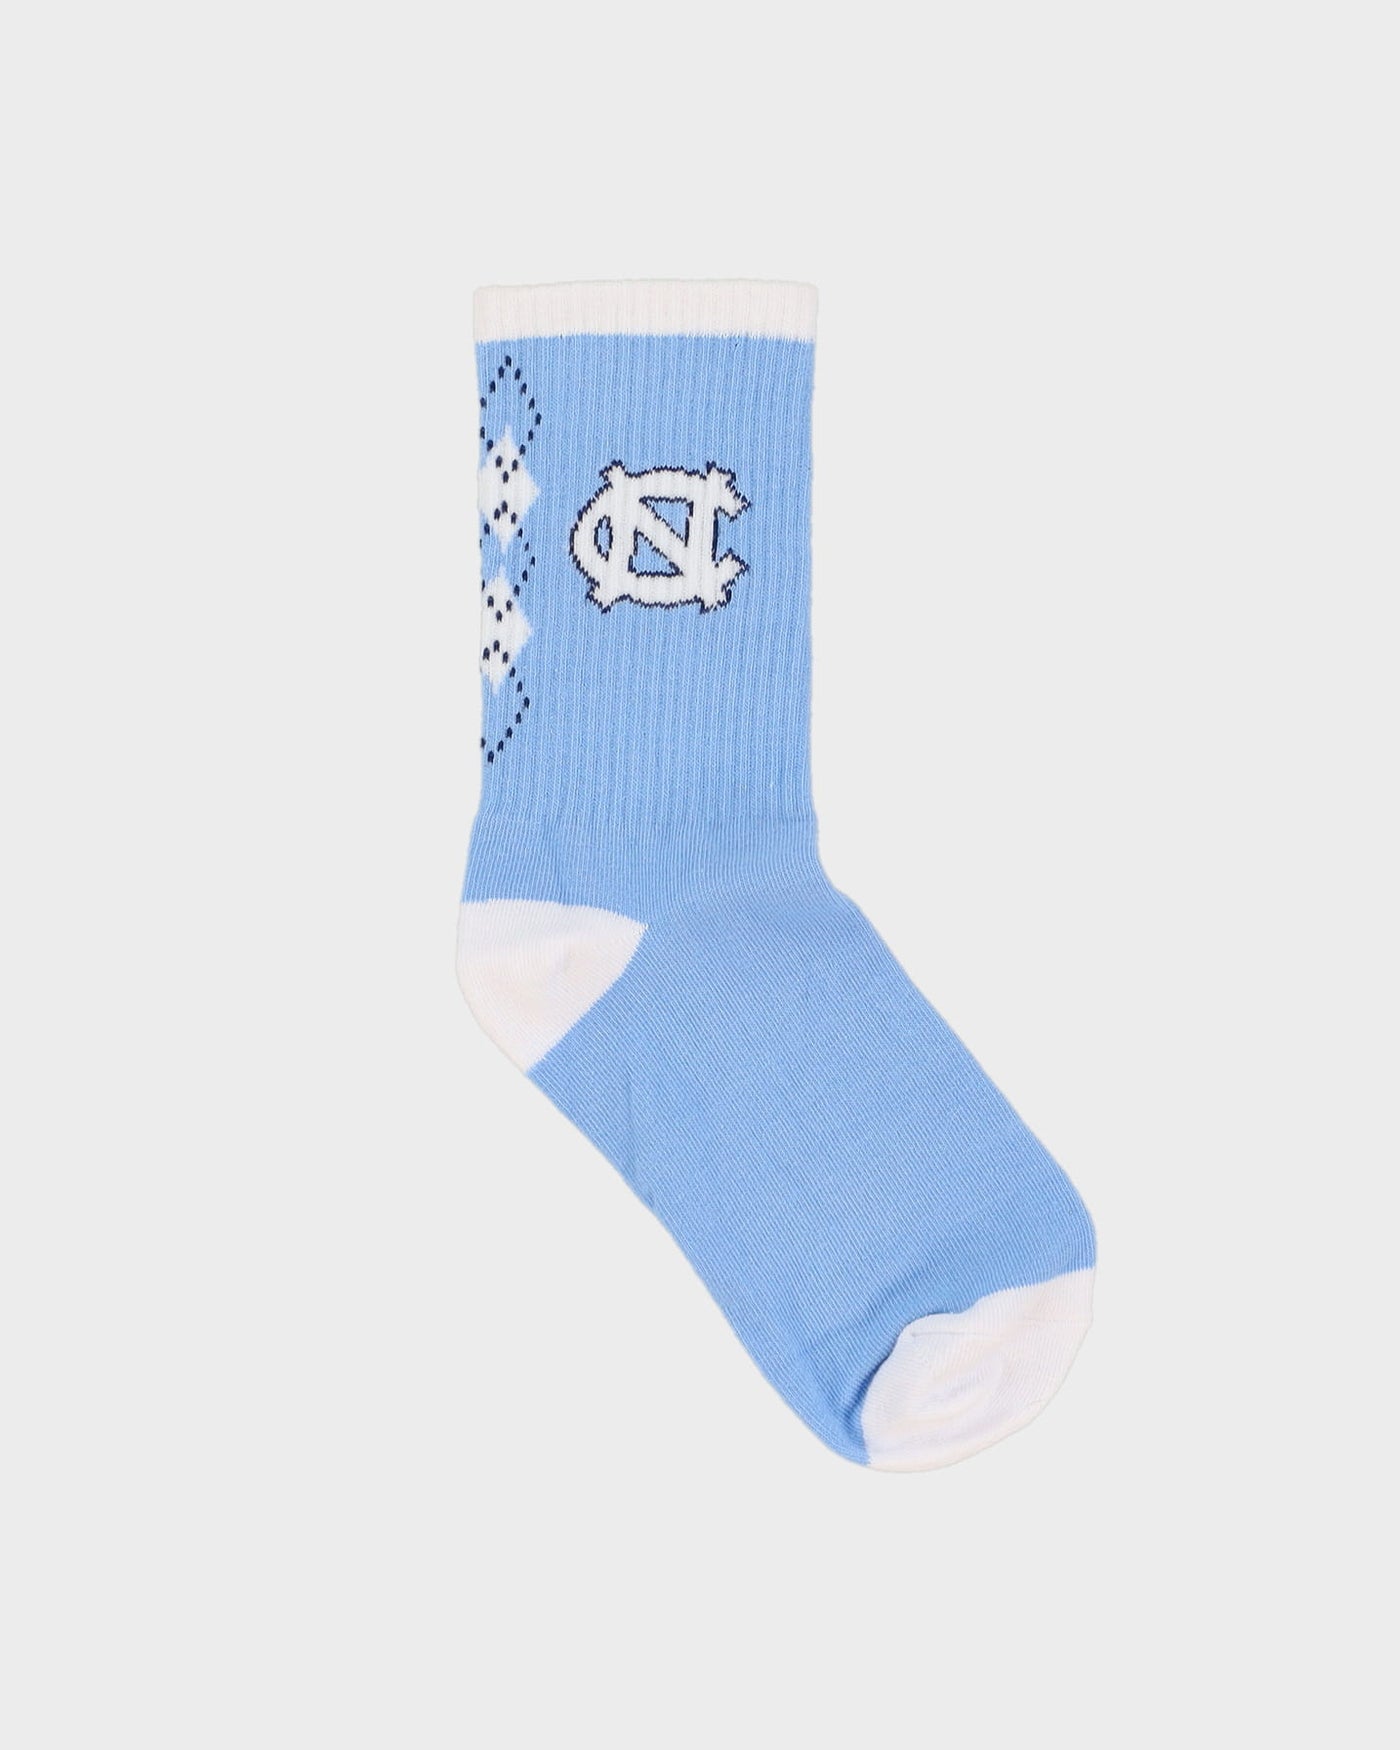 Blue NC Patterned Socks